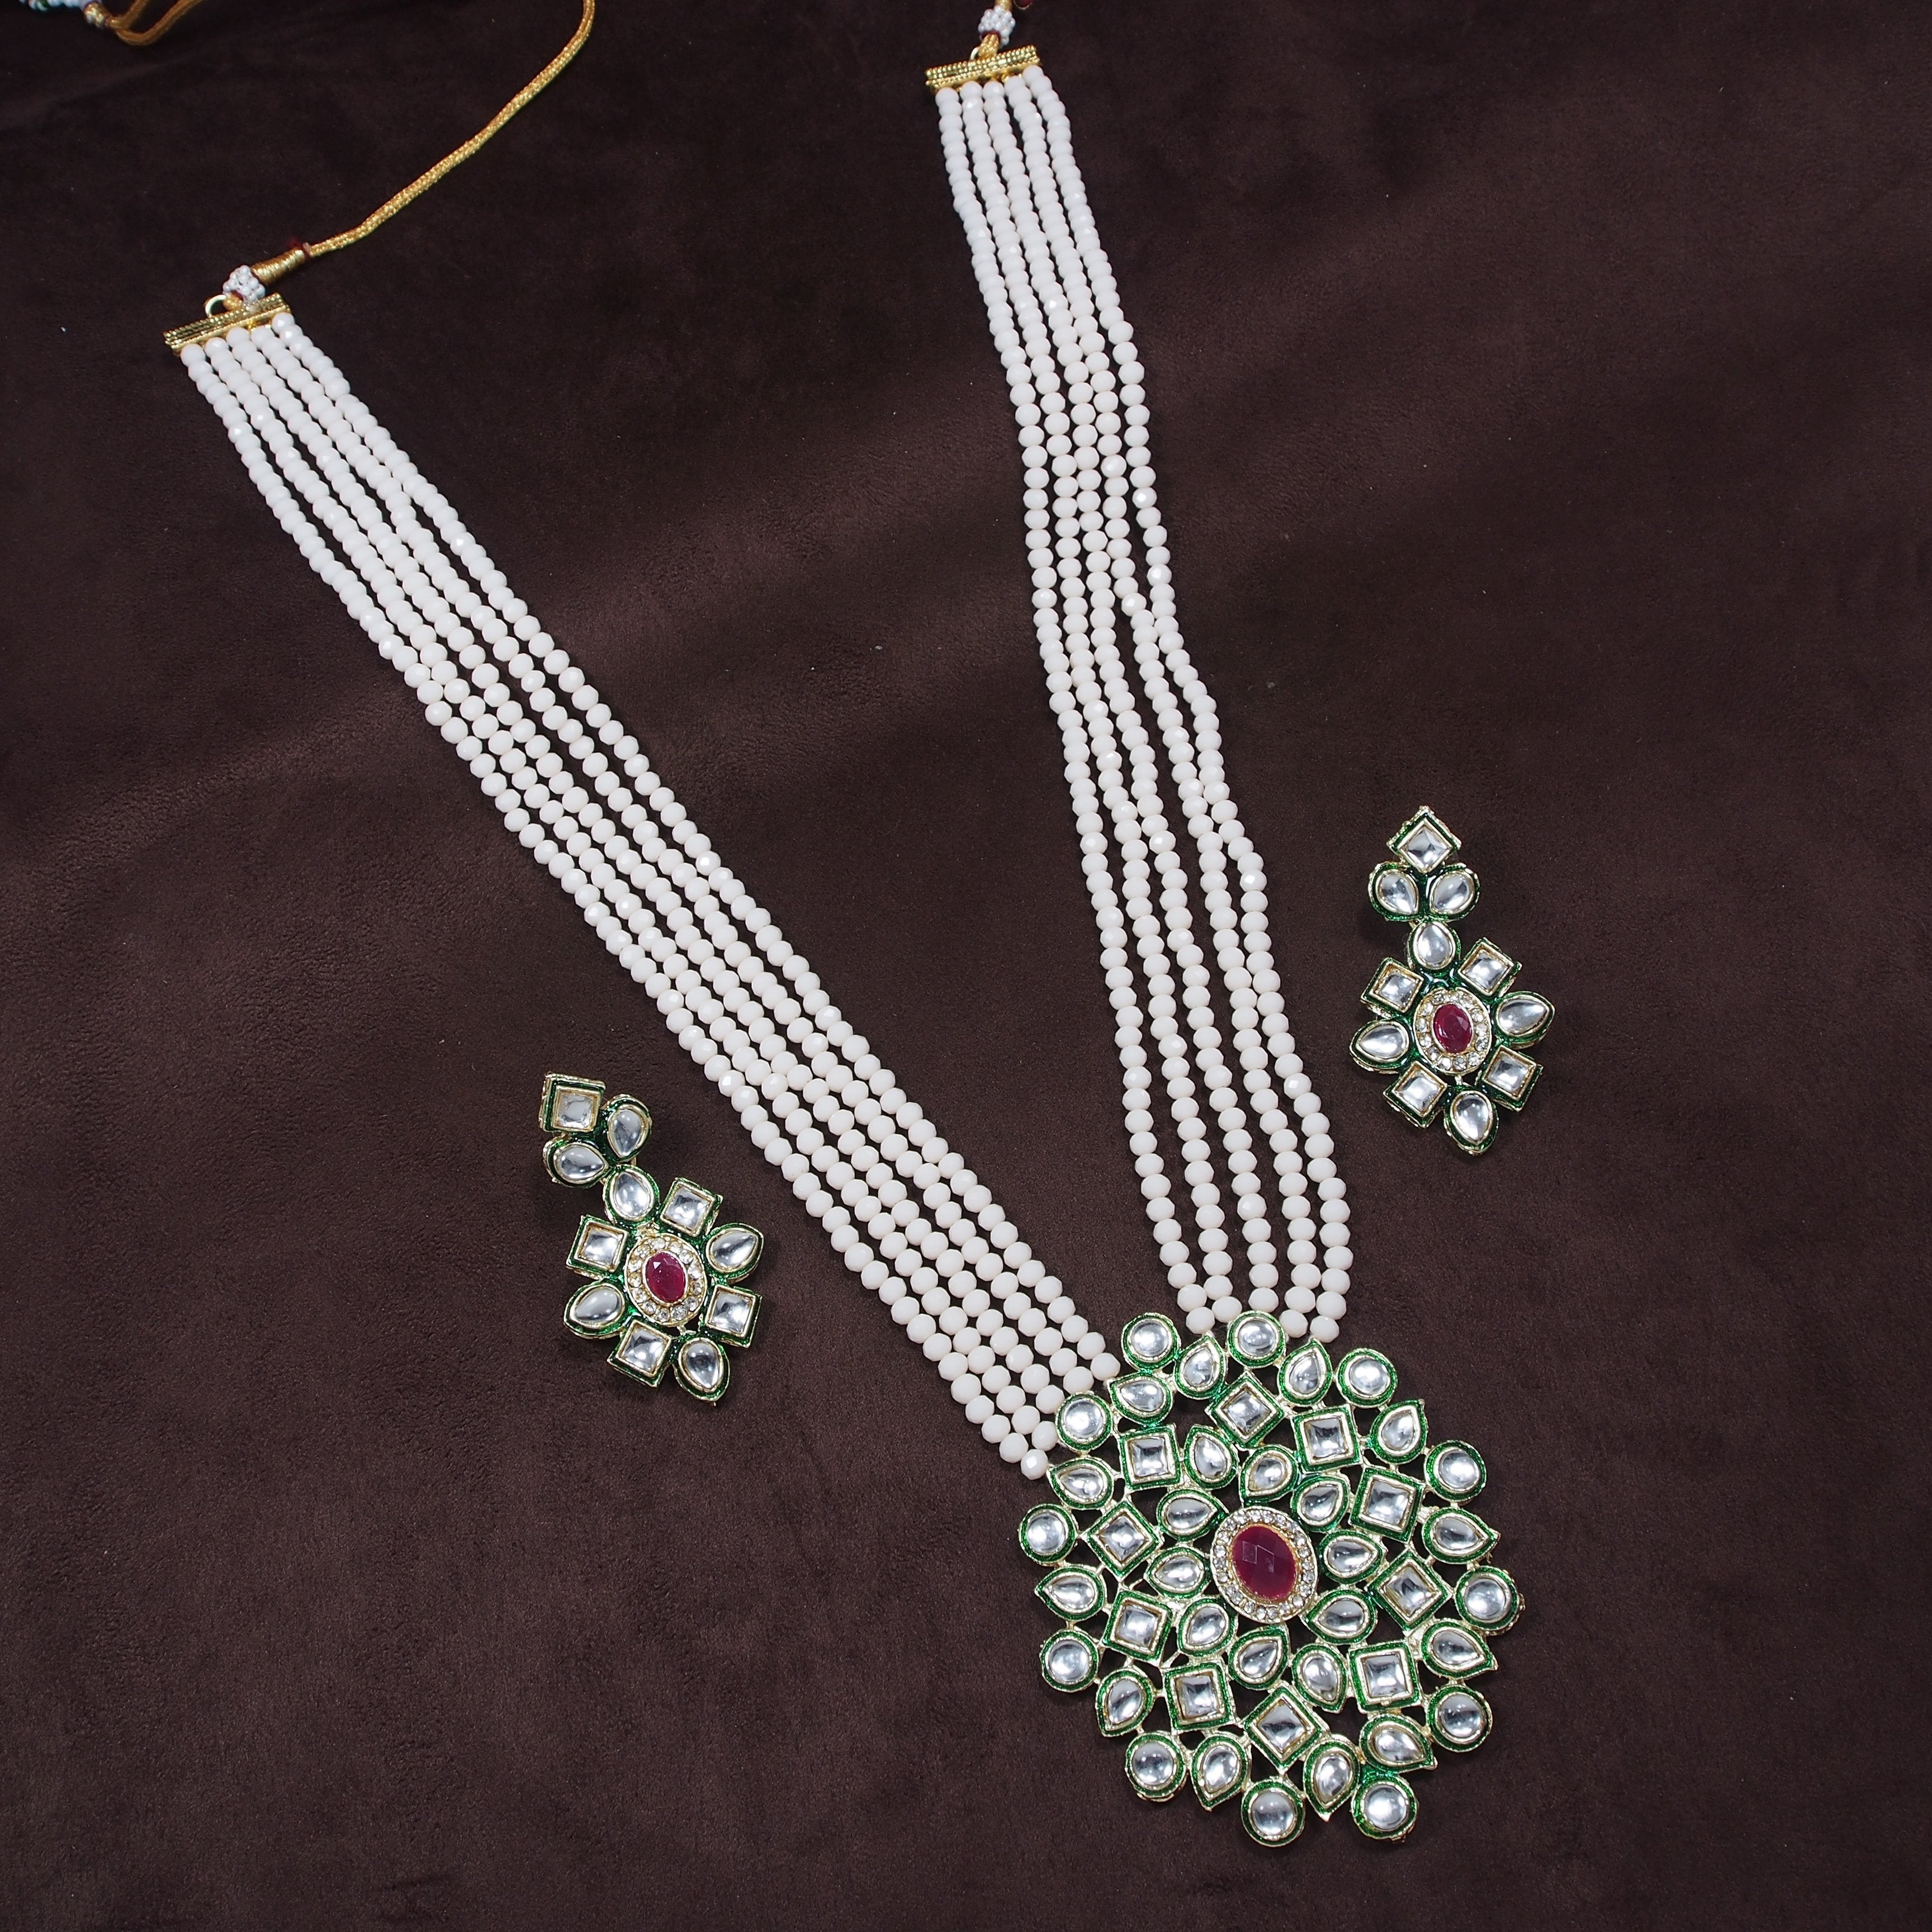 Women's 5 Layered Emerald Onyx Crystal Beads Necklace Set Glided With Uncut Polki Kundan - i jewels